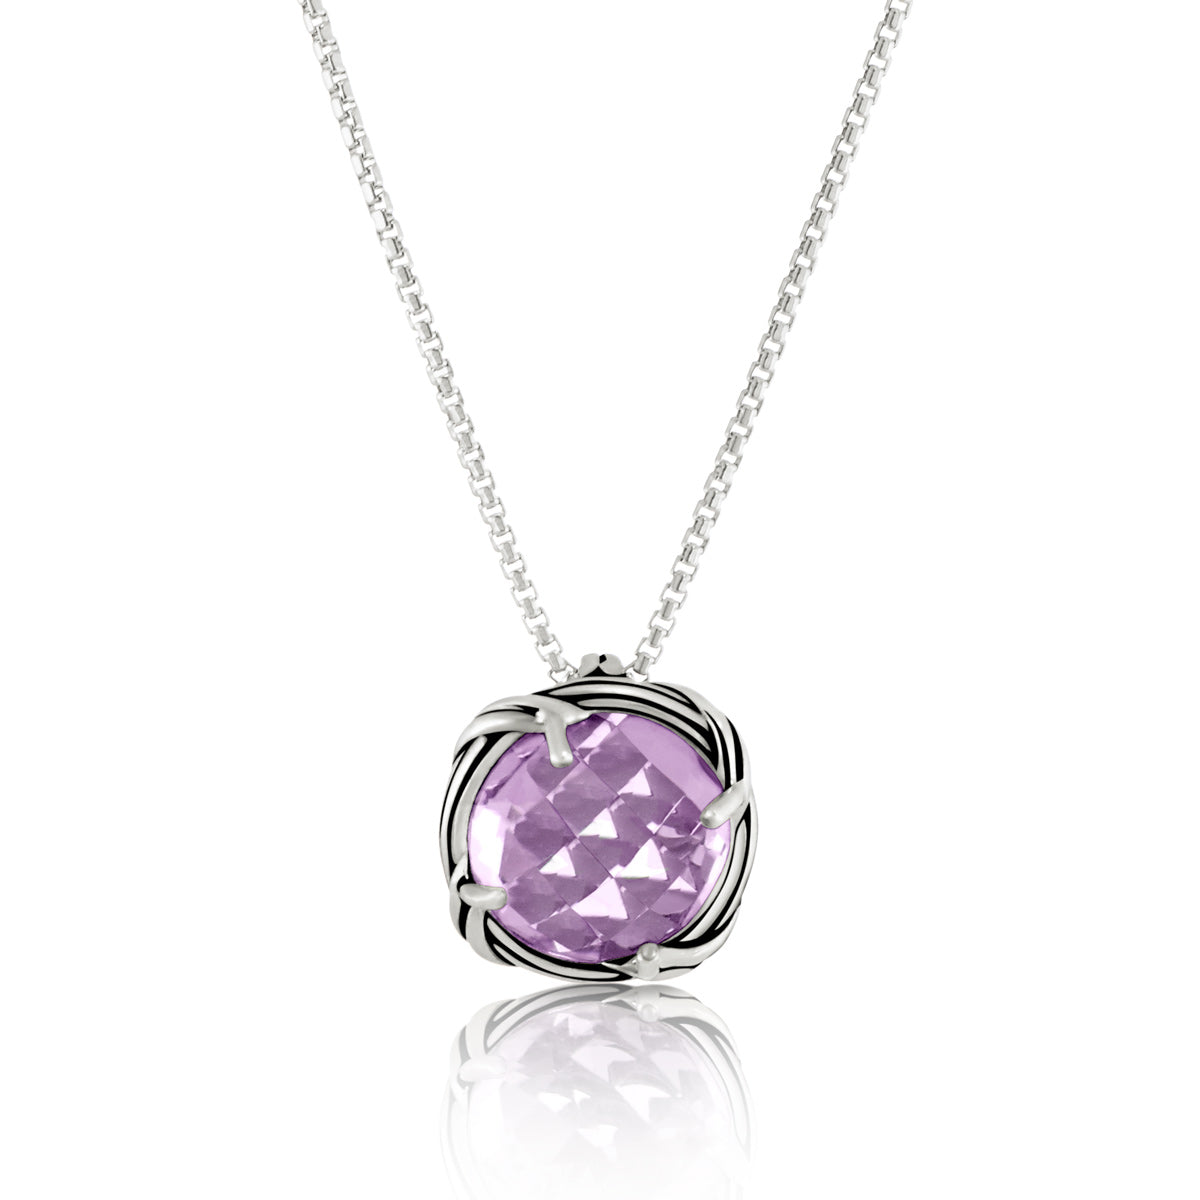 Fantasies Lavender Amethyst Necklace in sterling silver 10mm